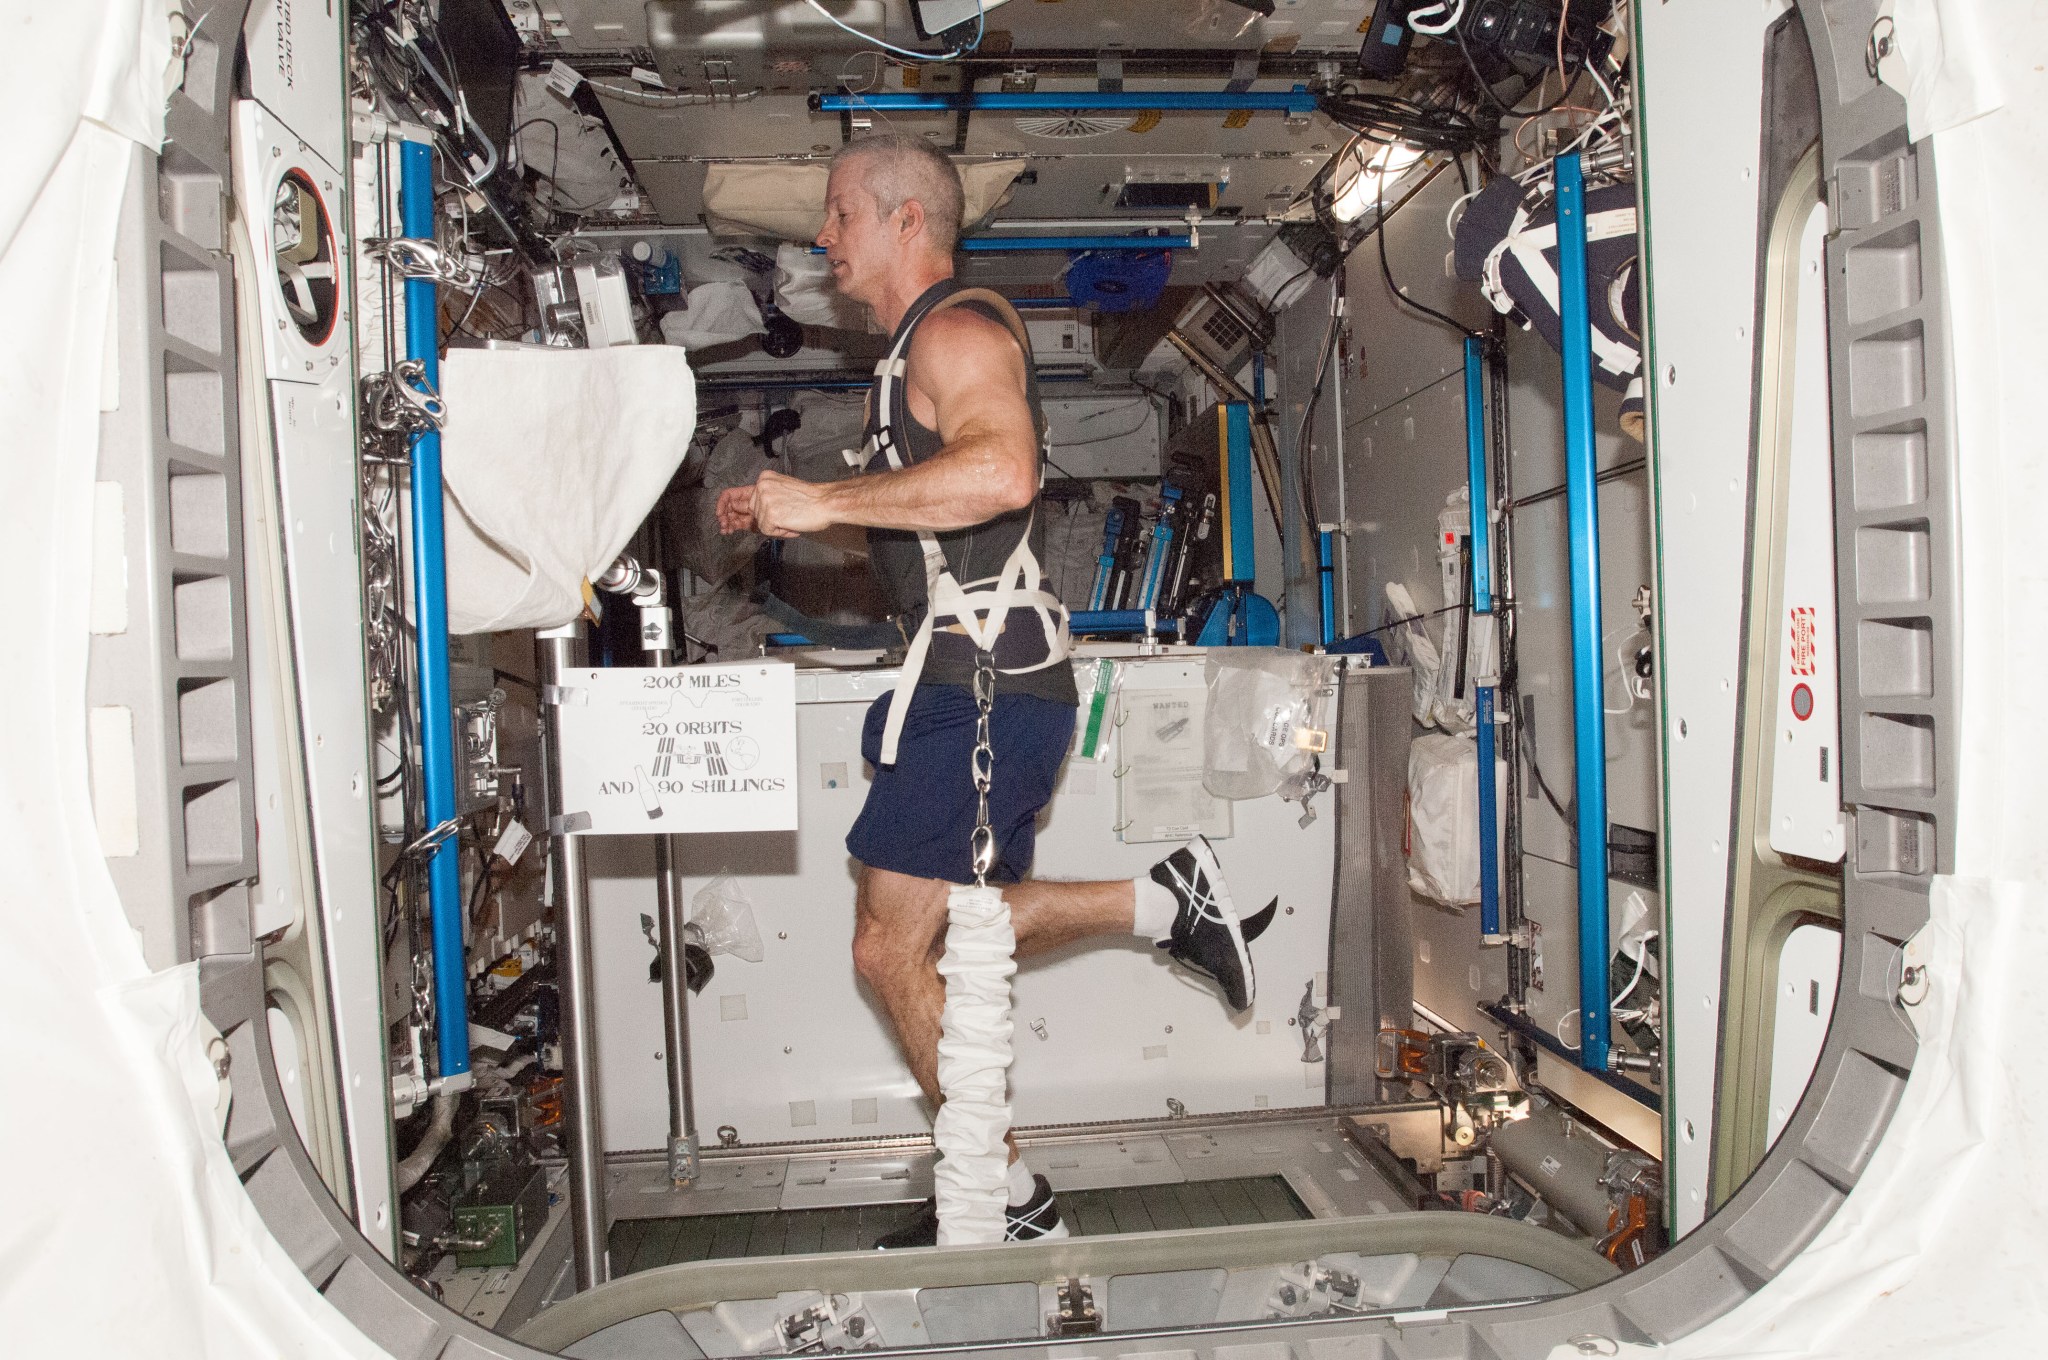 Astronaut exercises on the T2 treadmill